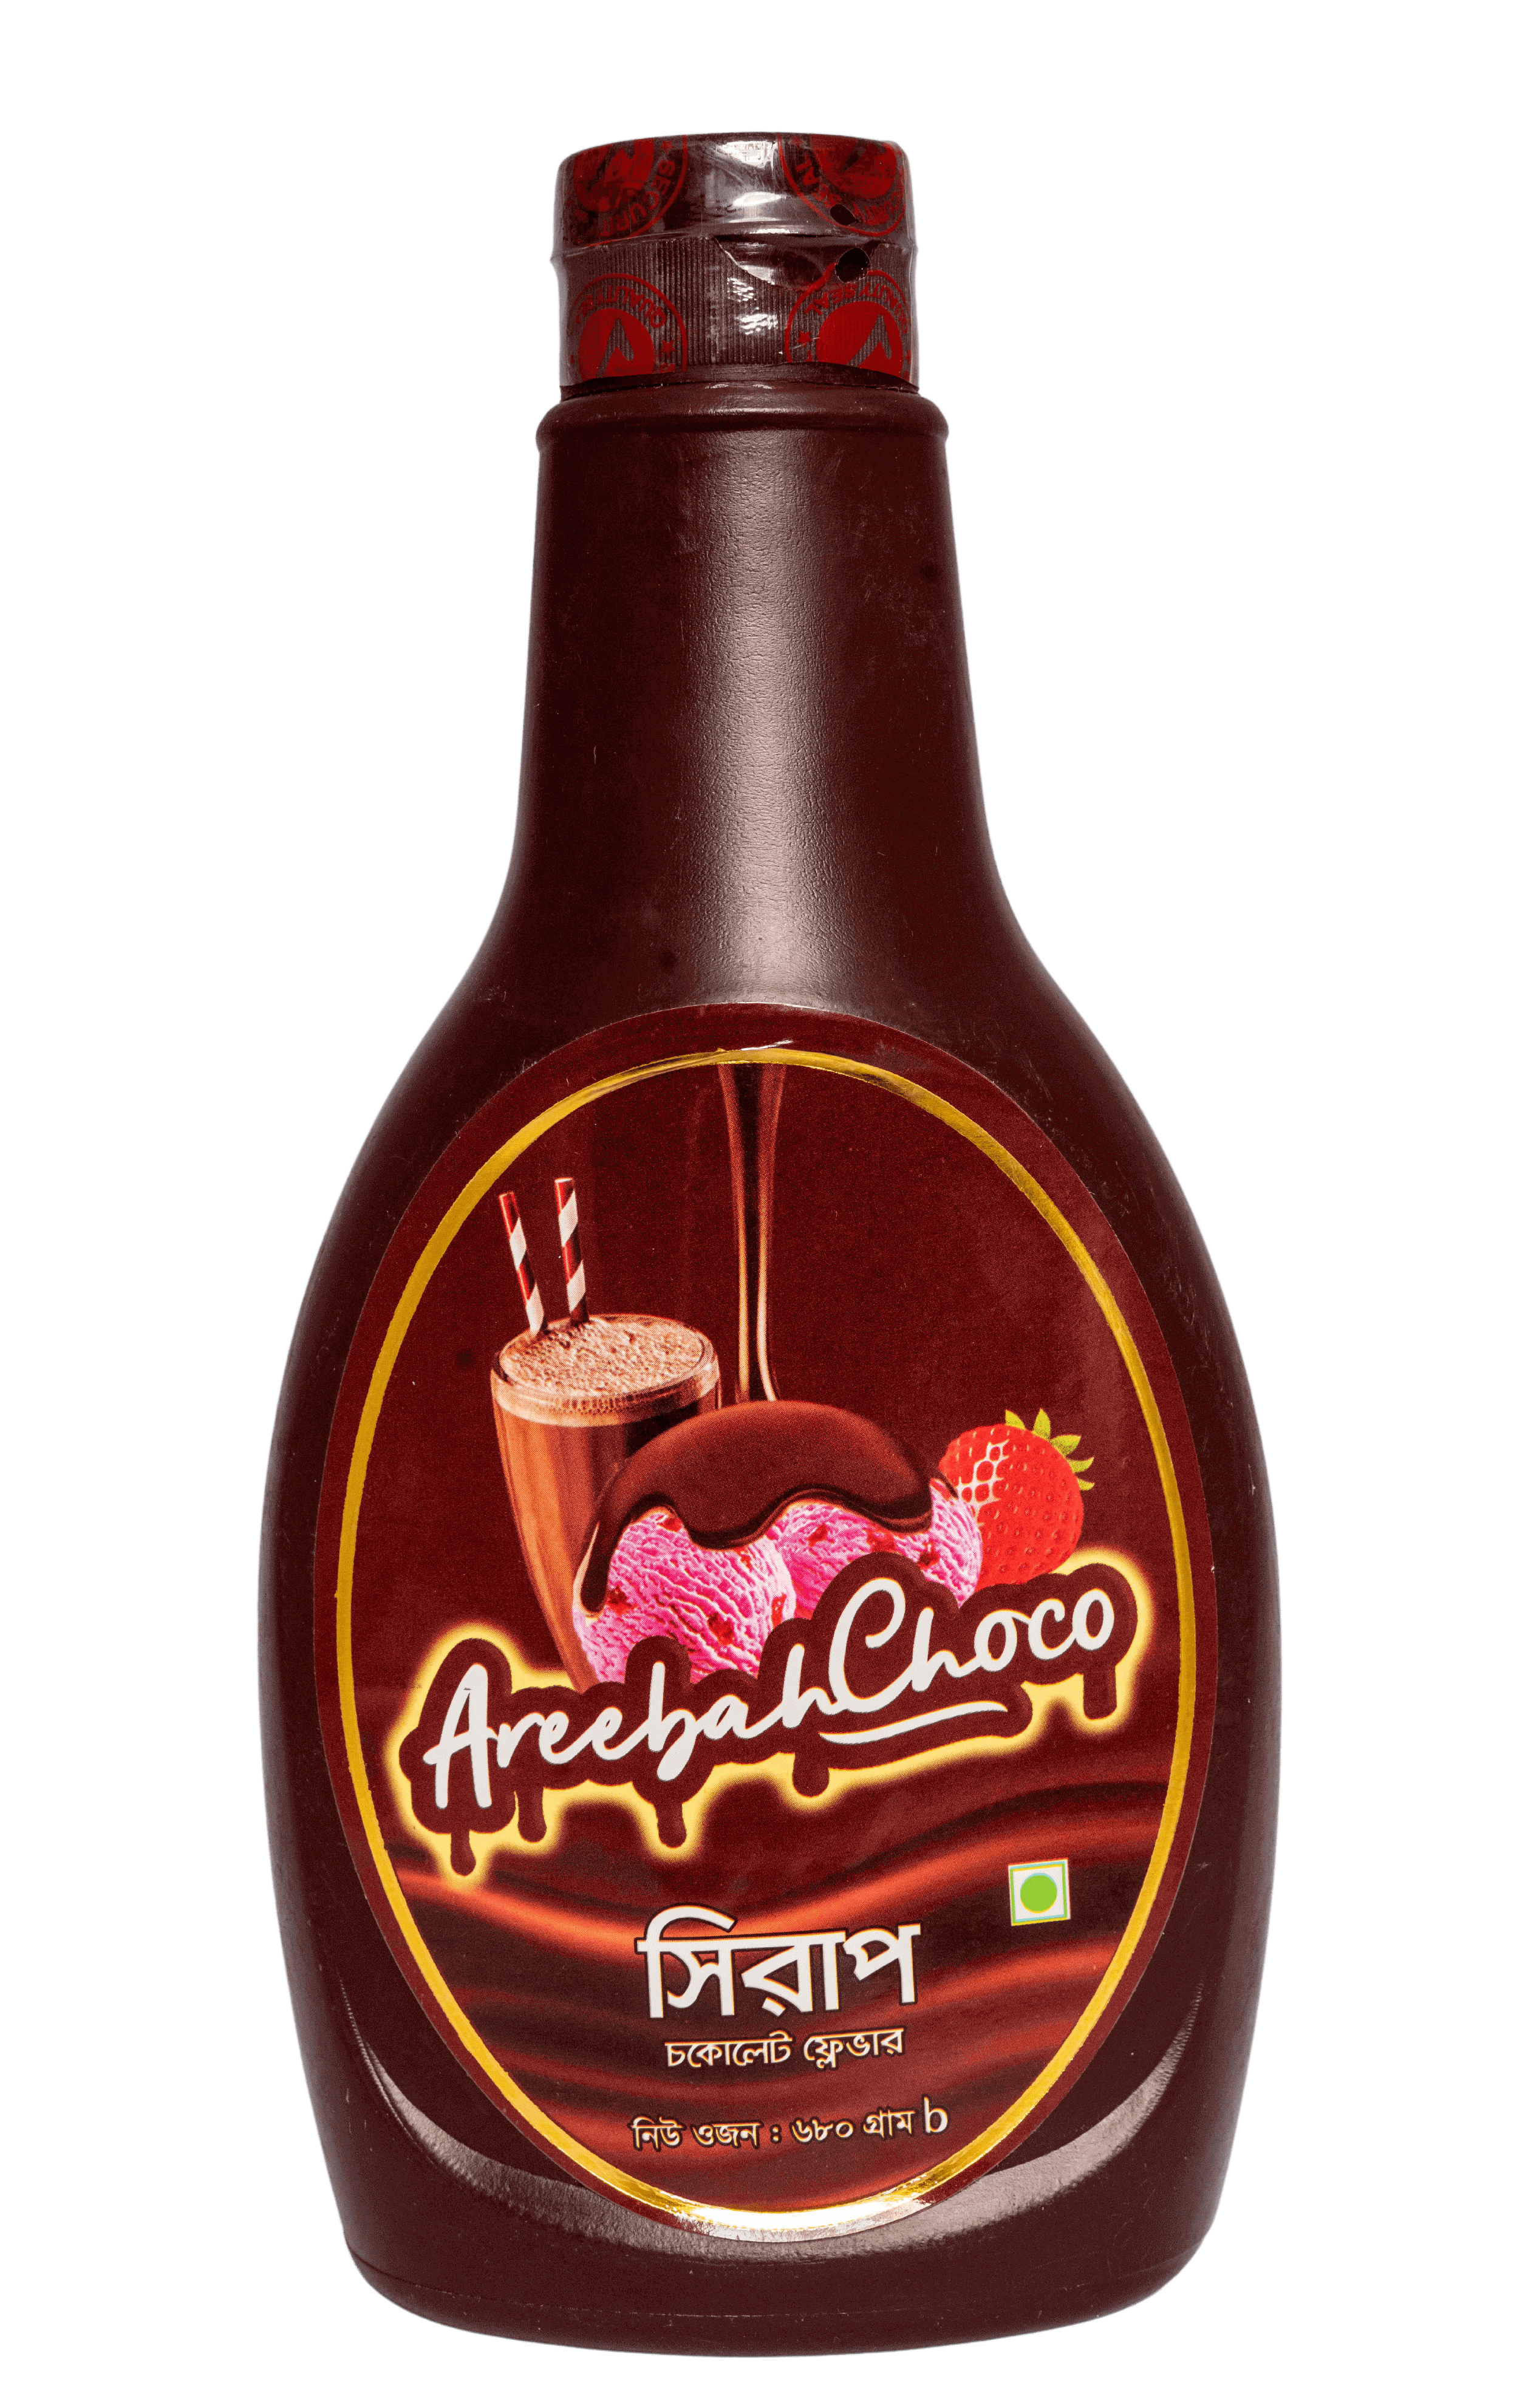 Areebah Choco Syrup – Chocolate flavor